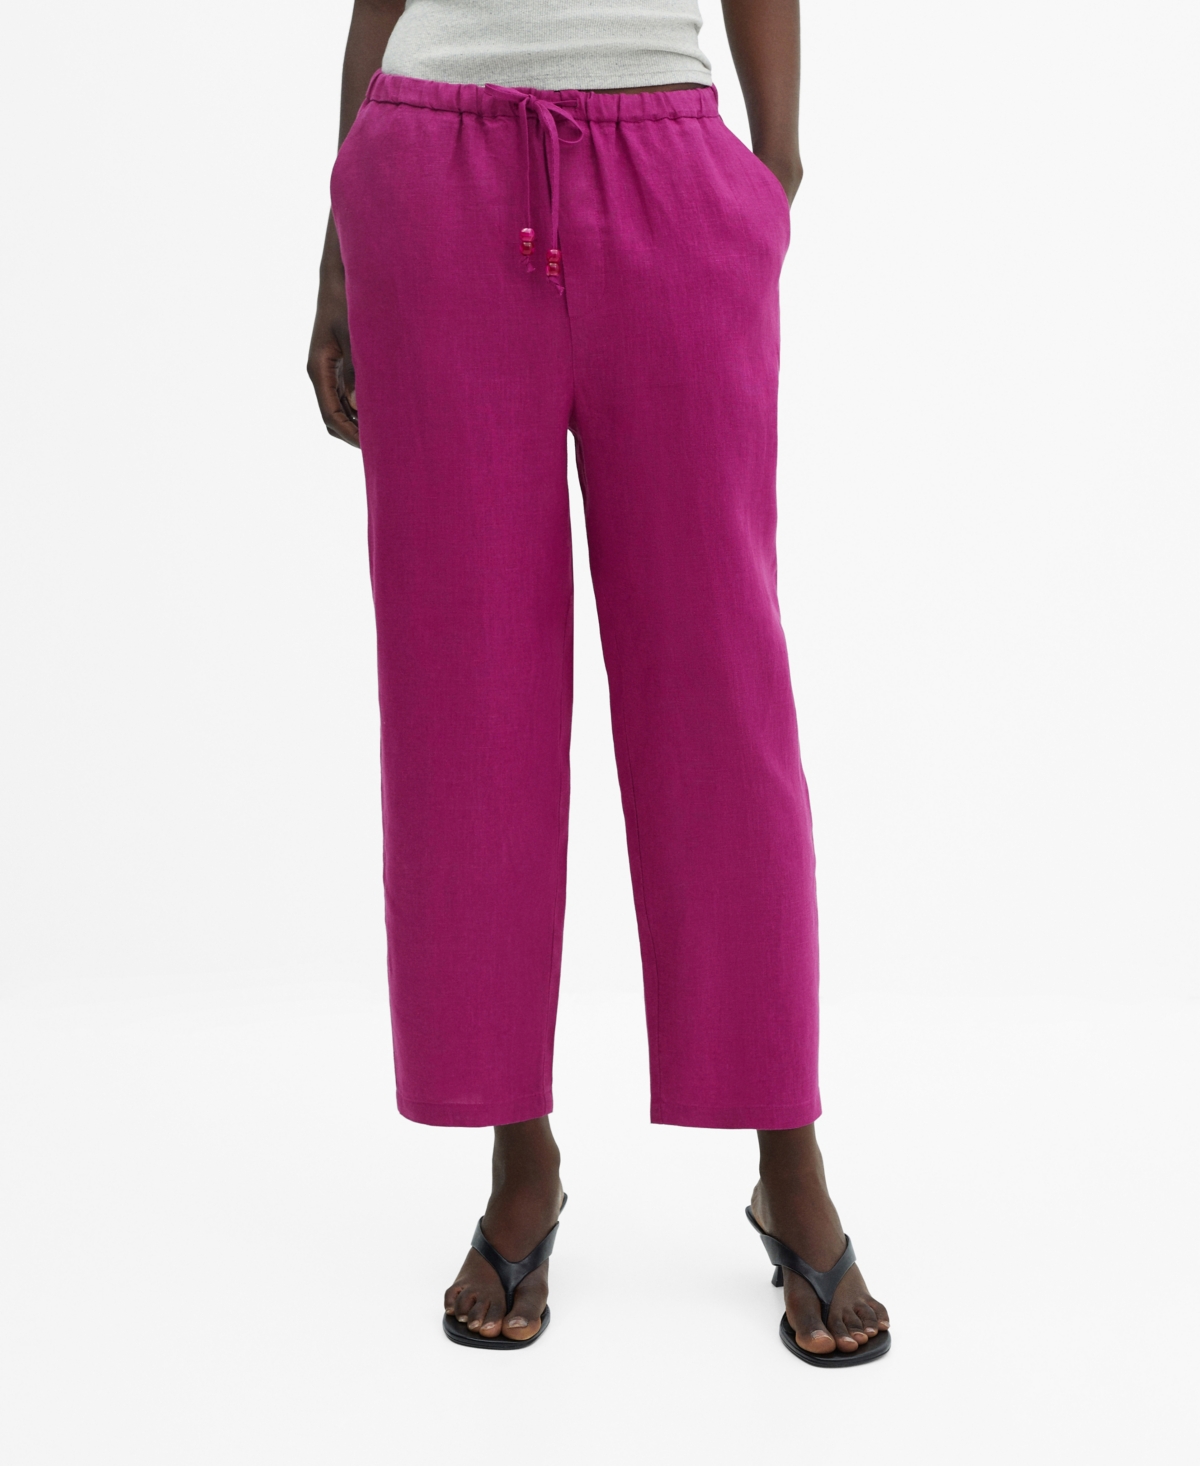 Mango Women's 100% Linen Pants In Bright Pin